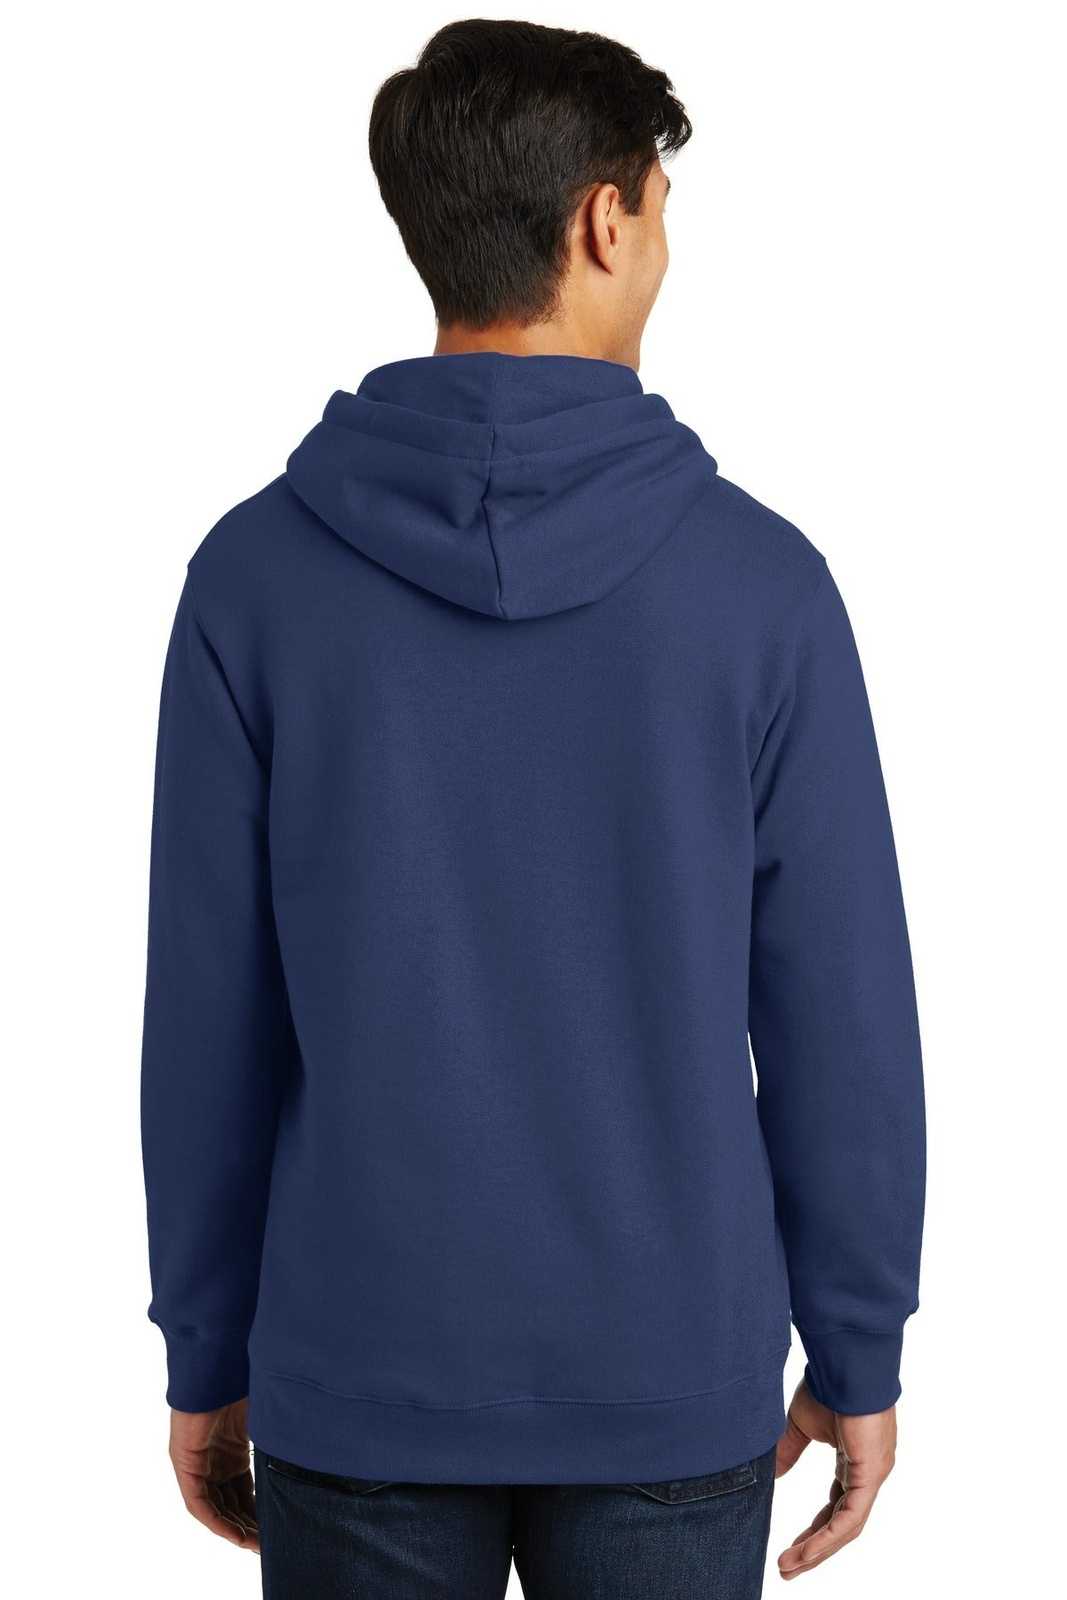 Port &amp; Company PC850H Fan Favorite Fleece Pullover Hooded Sweatshirt - Team Navy - HIT a Double - 2